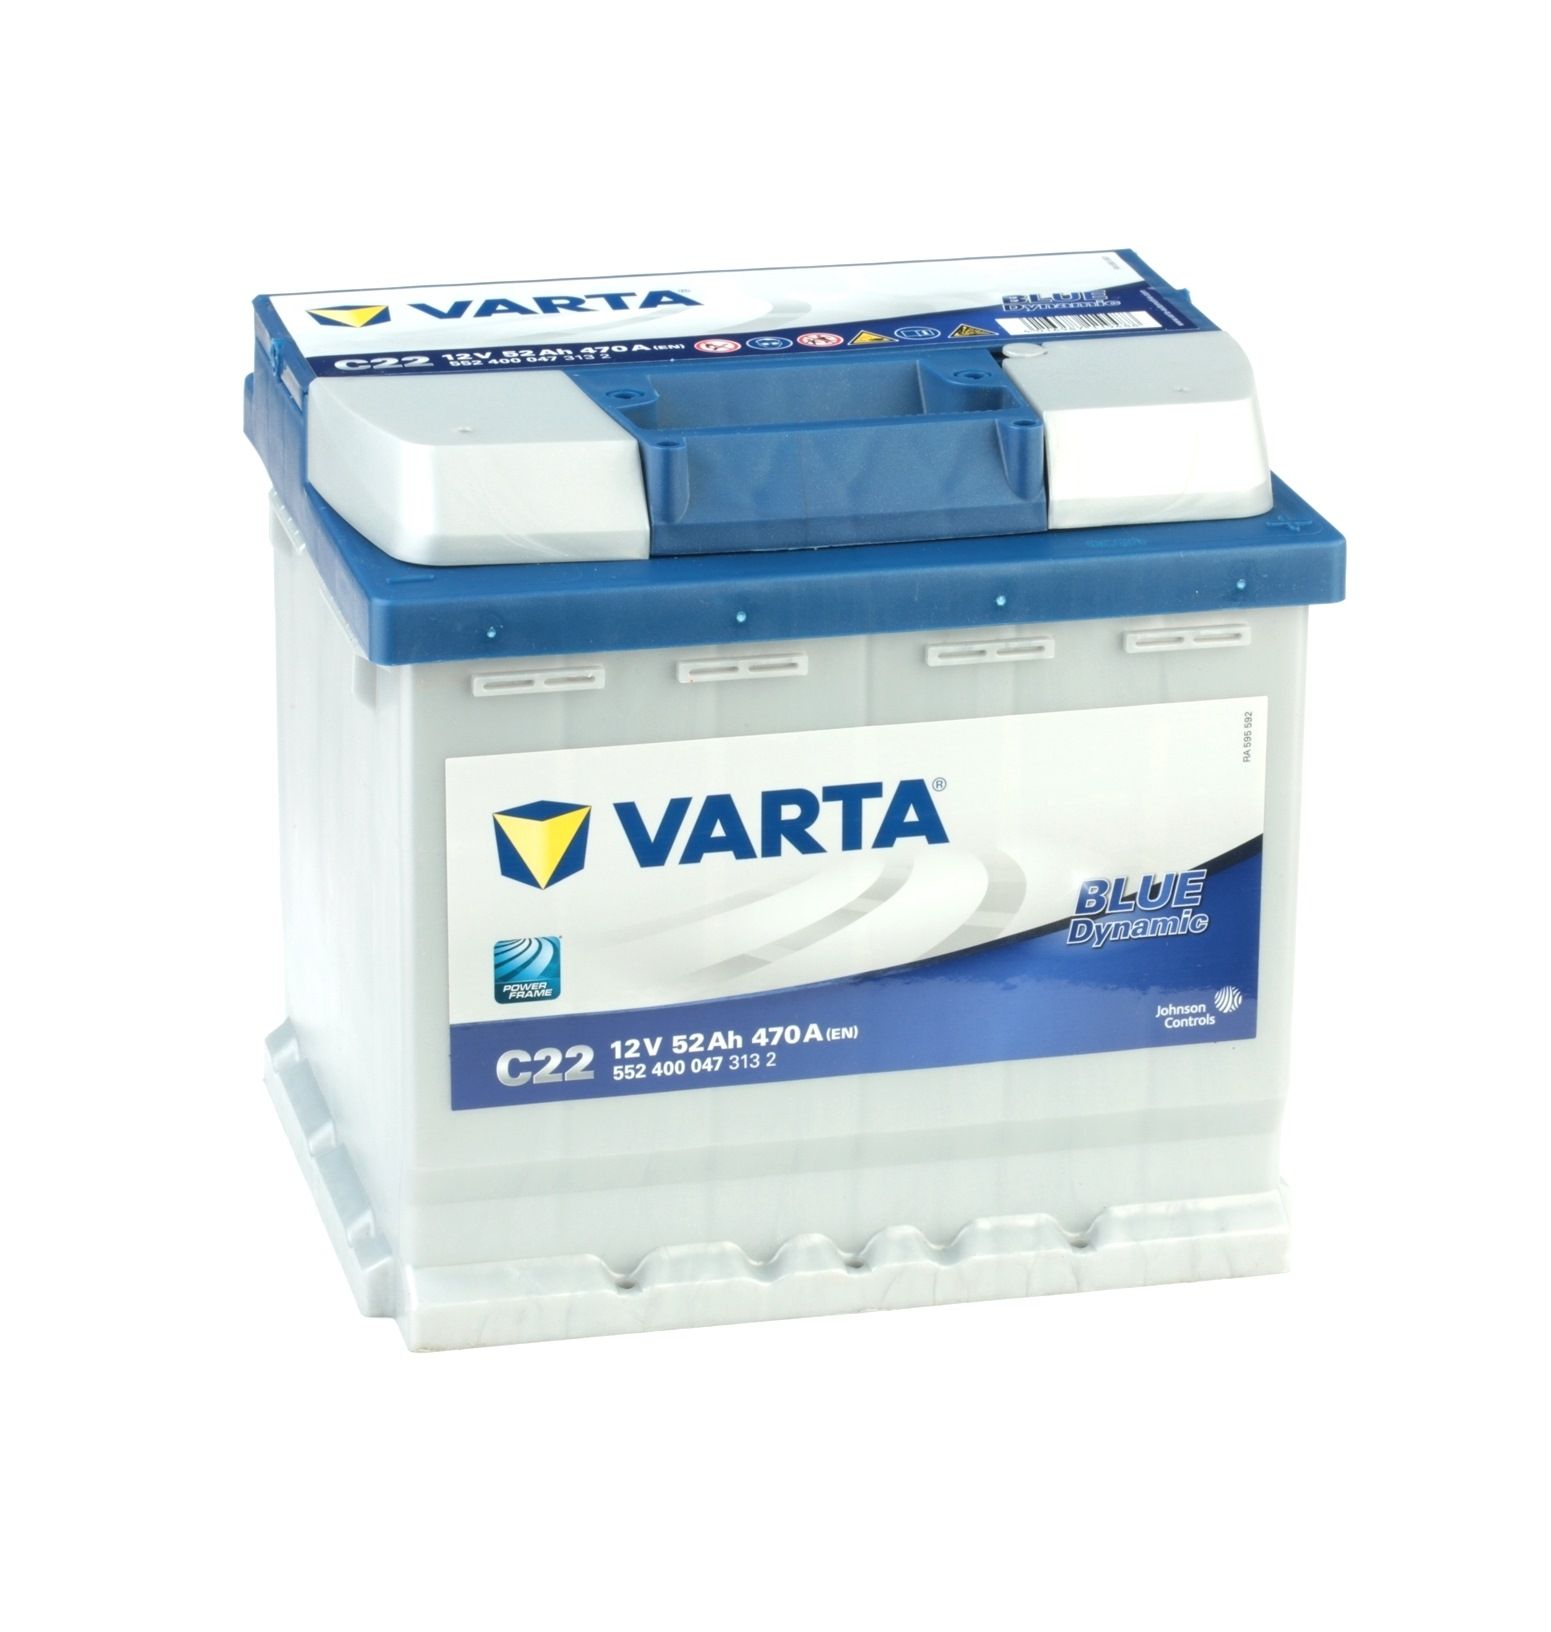 VARTA BLUE dynamic, C22 5524000473132 Batteria 12V 52Ah 470A B13 Accumulatore piombo-acido